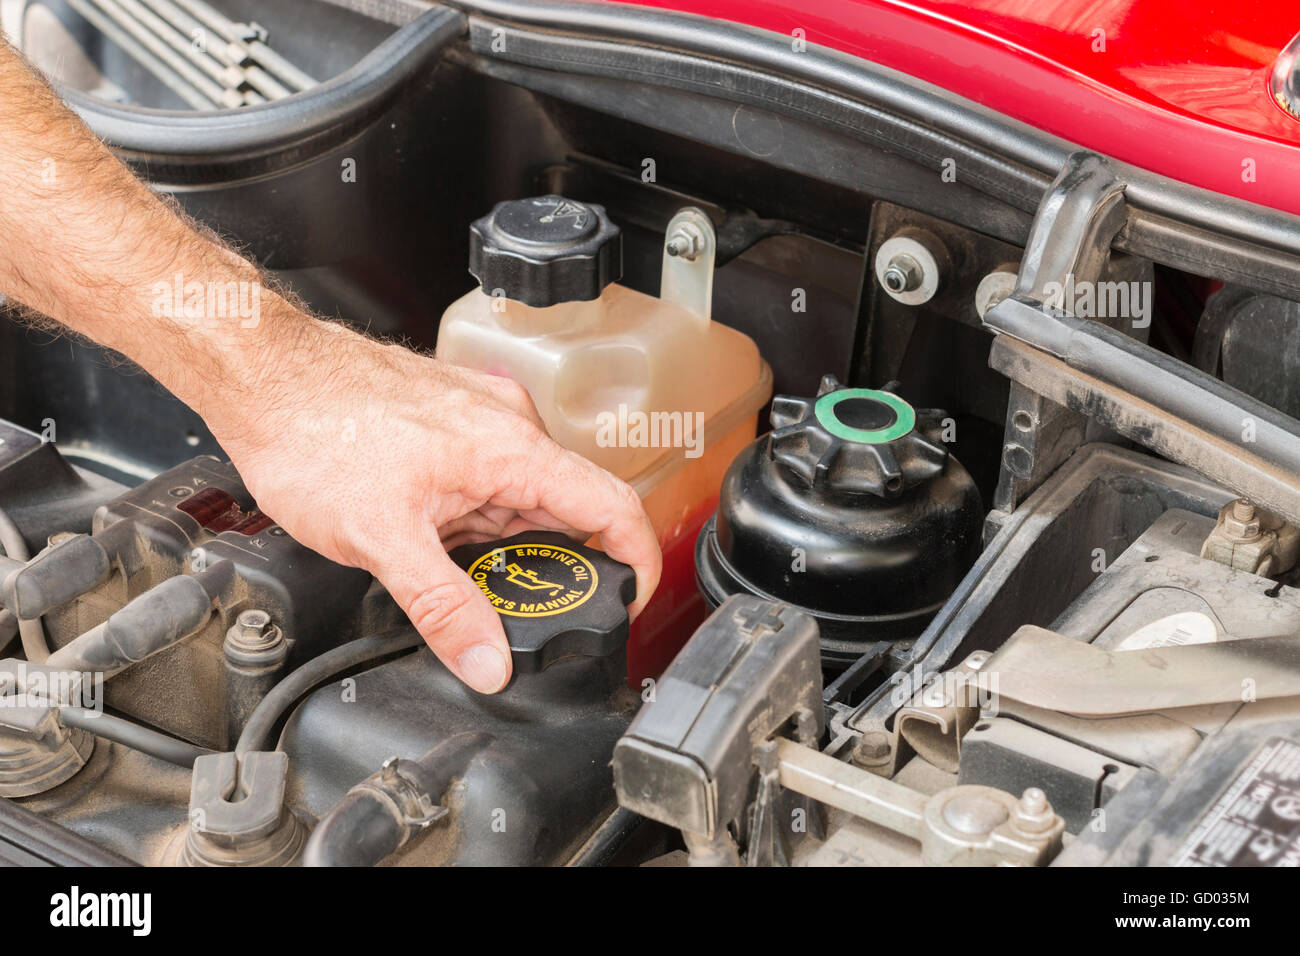 Überprüfen Sie Motor Öl Auto im shop Stockfotografie - Alamy